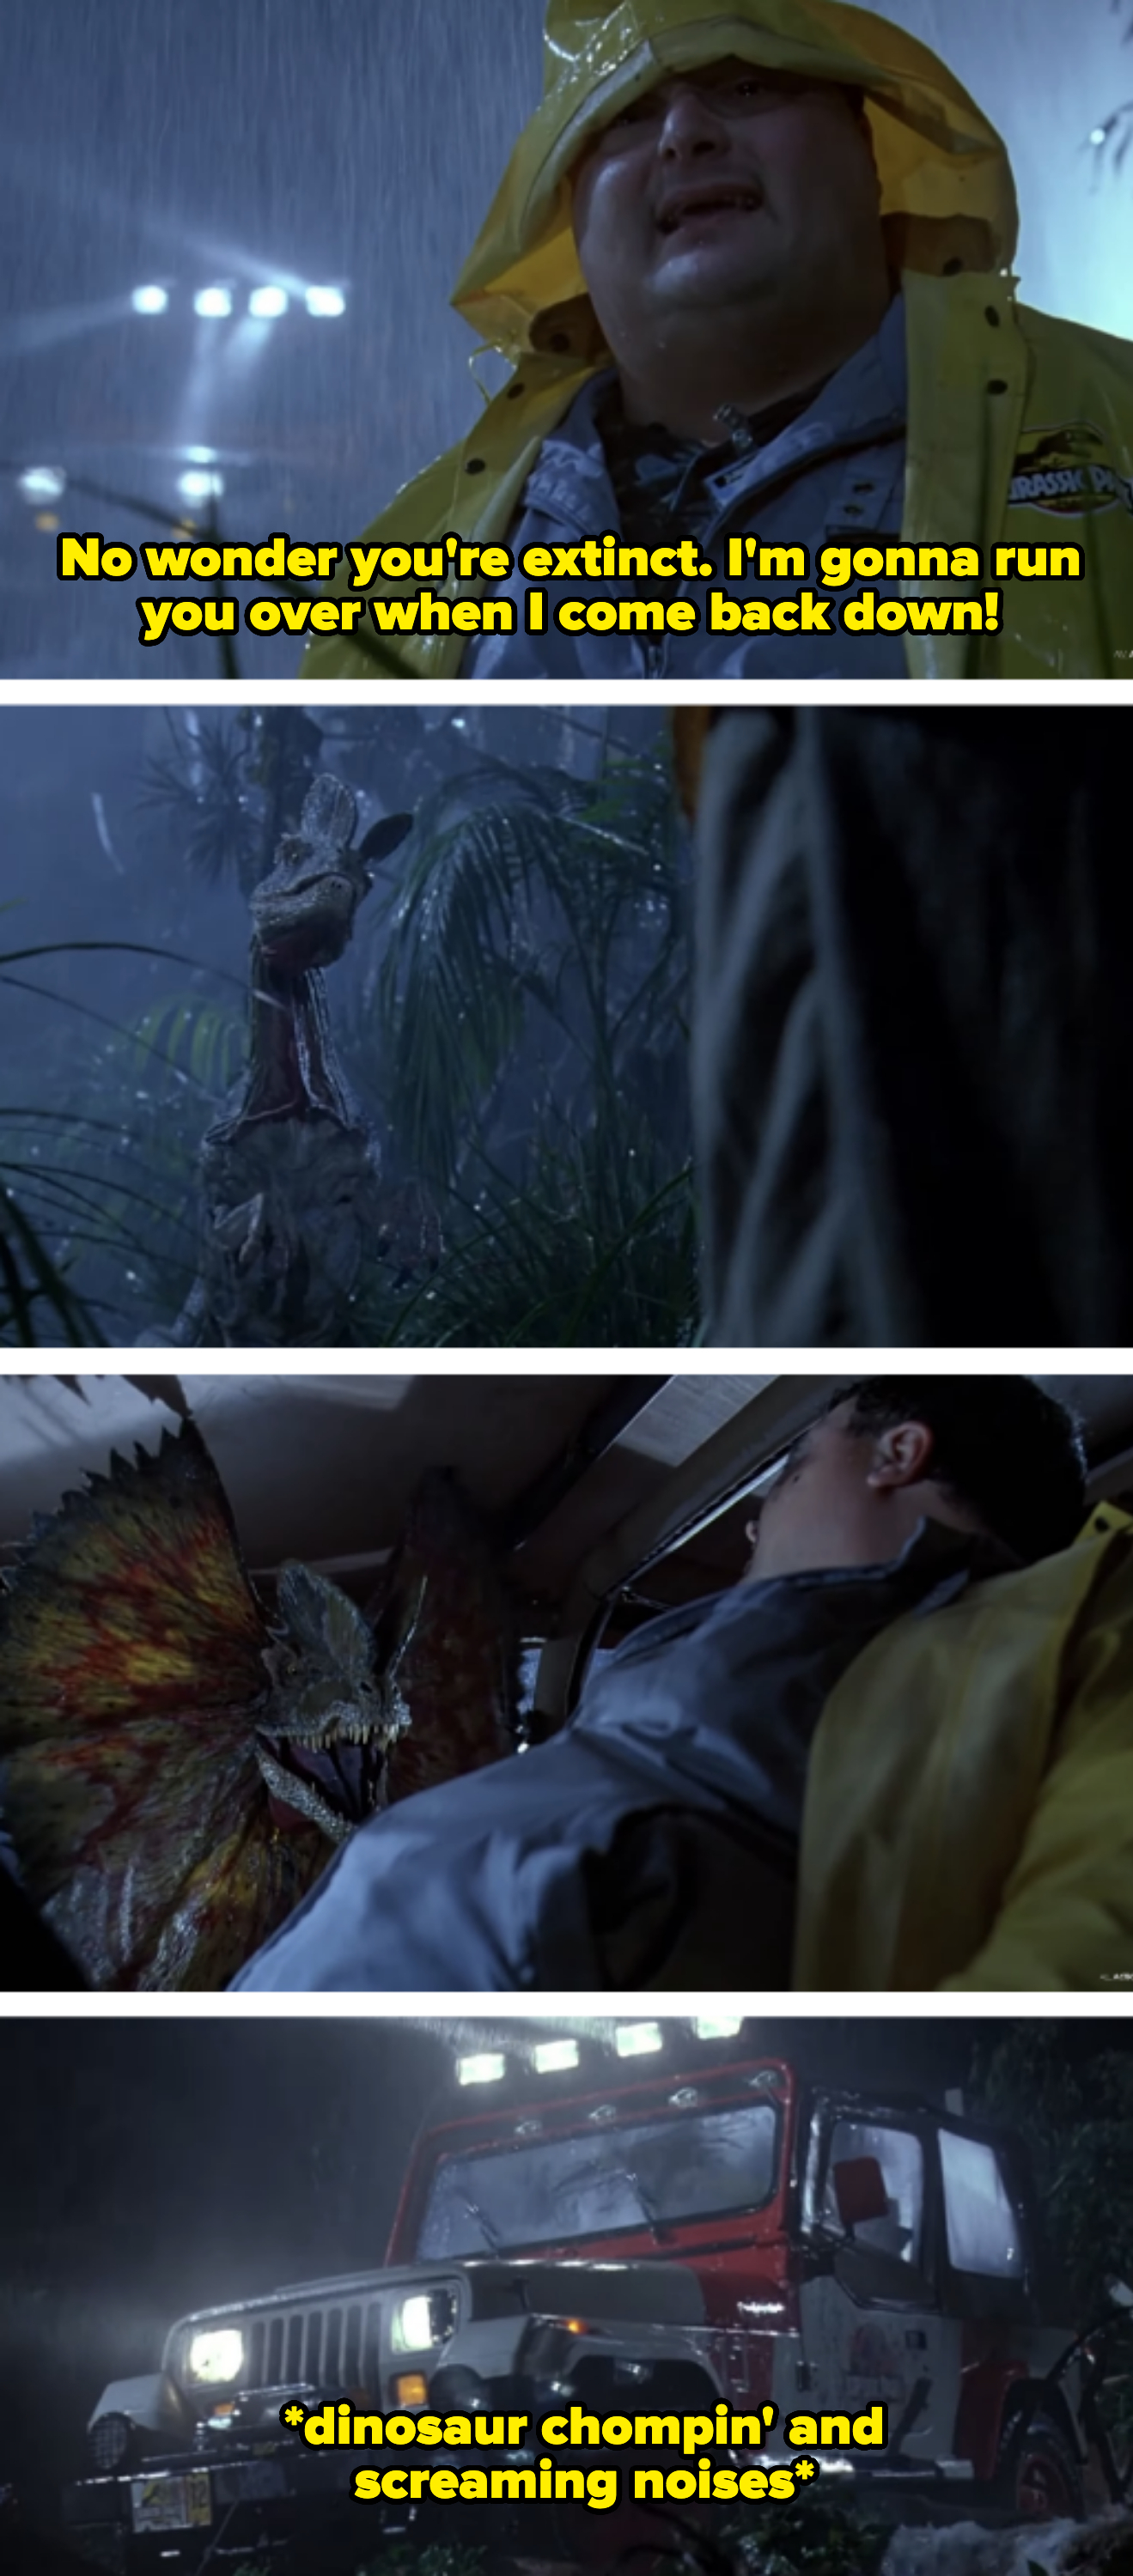 Man in rain gear faces a dinosaur; dinosaur lurks by a vehicle; vehicle&#x27;s headlights in rain